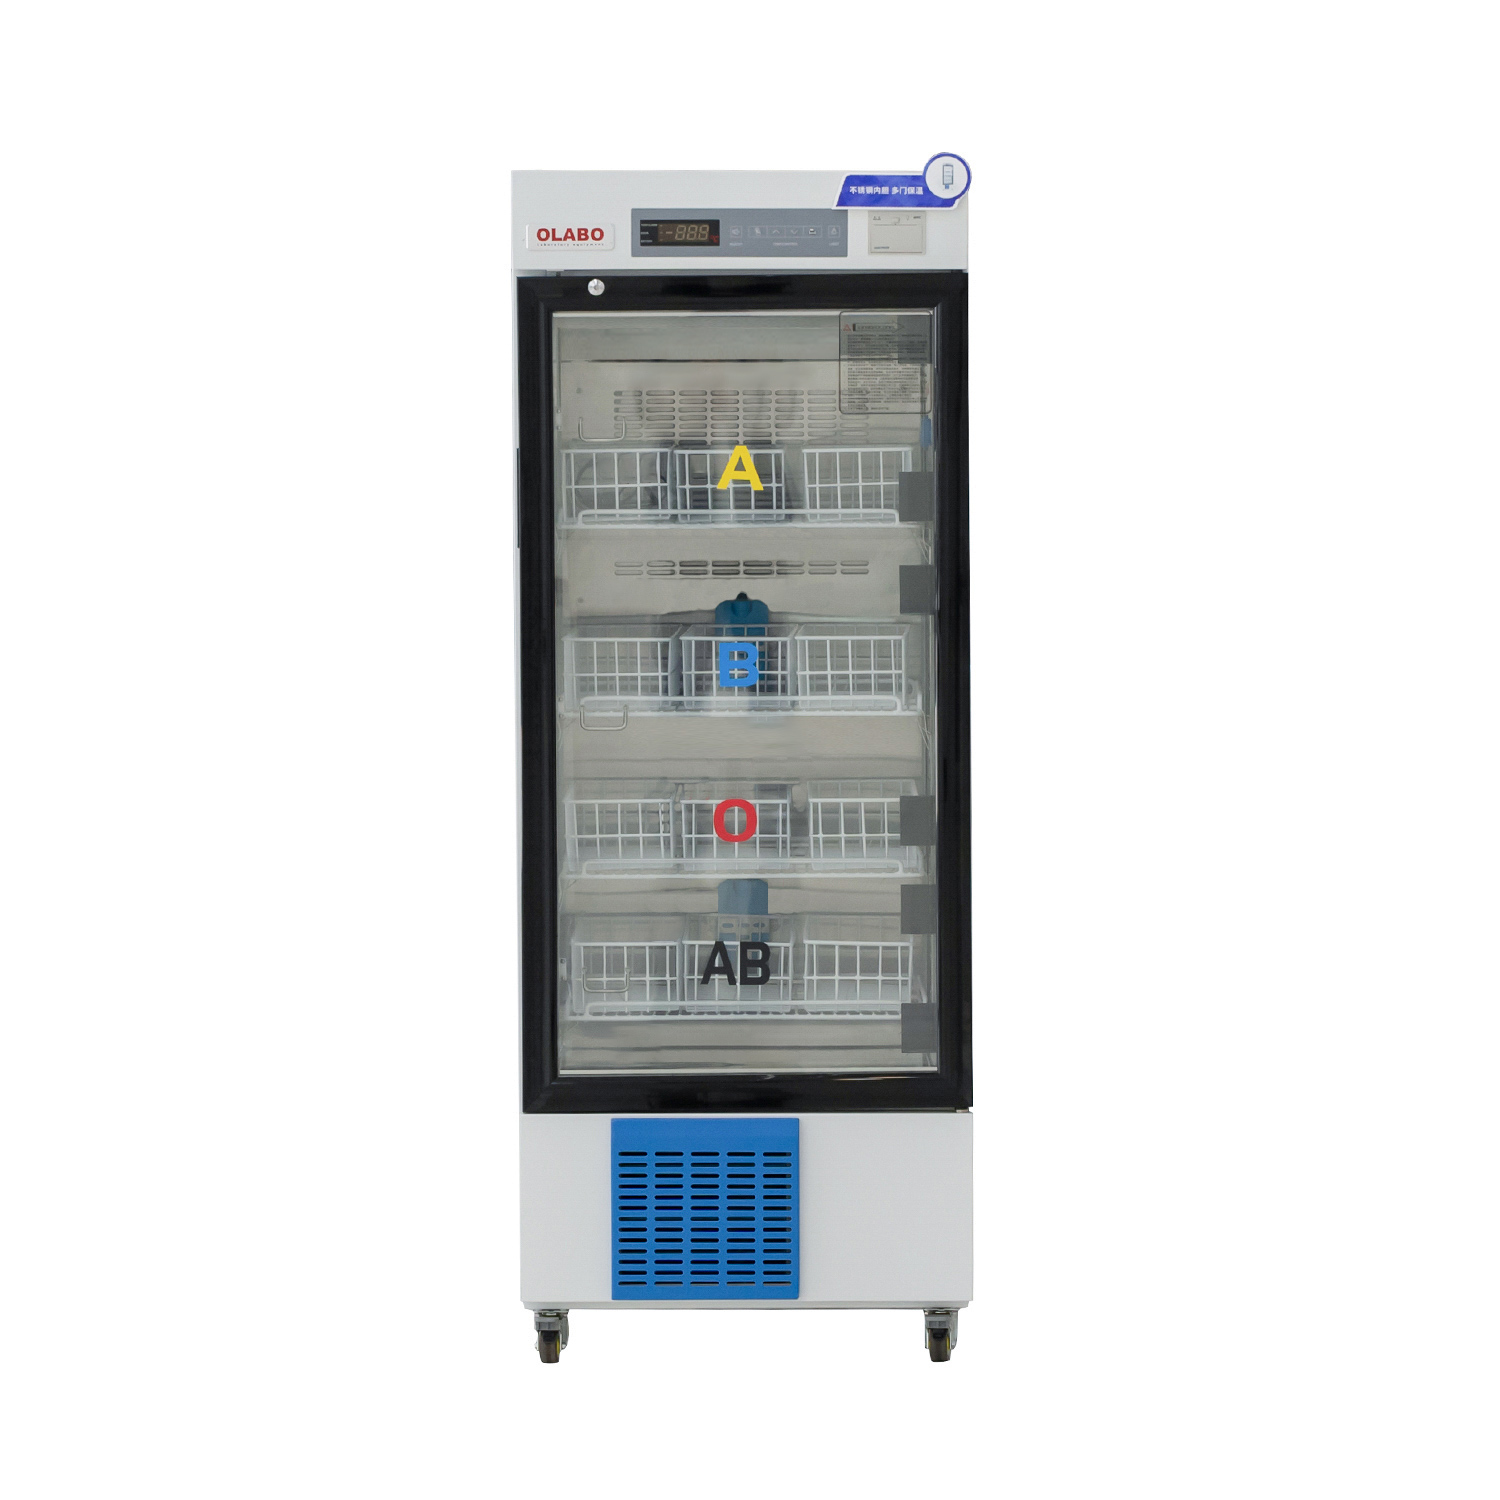 4 Degrees Celsius Blood Bank Refrigerator Rau Laboratory